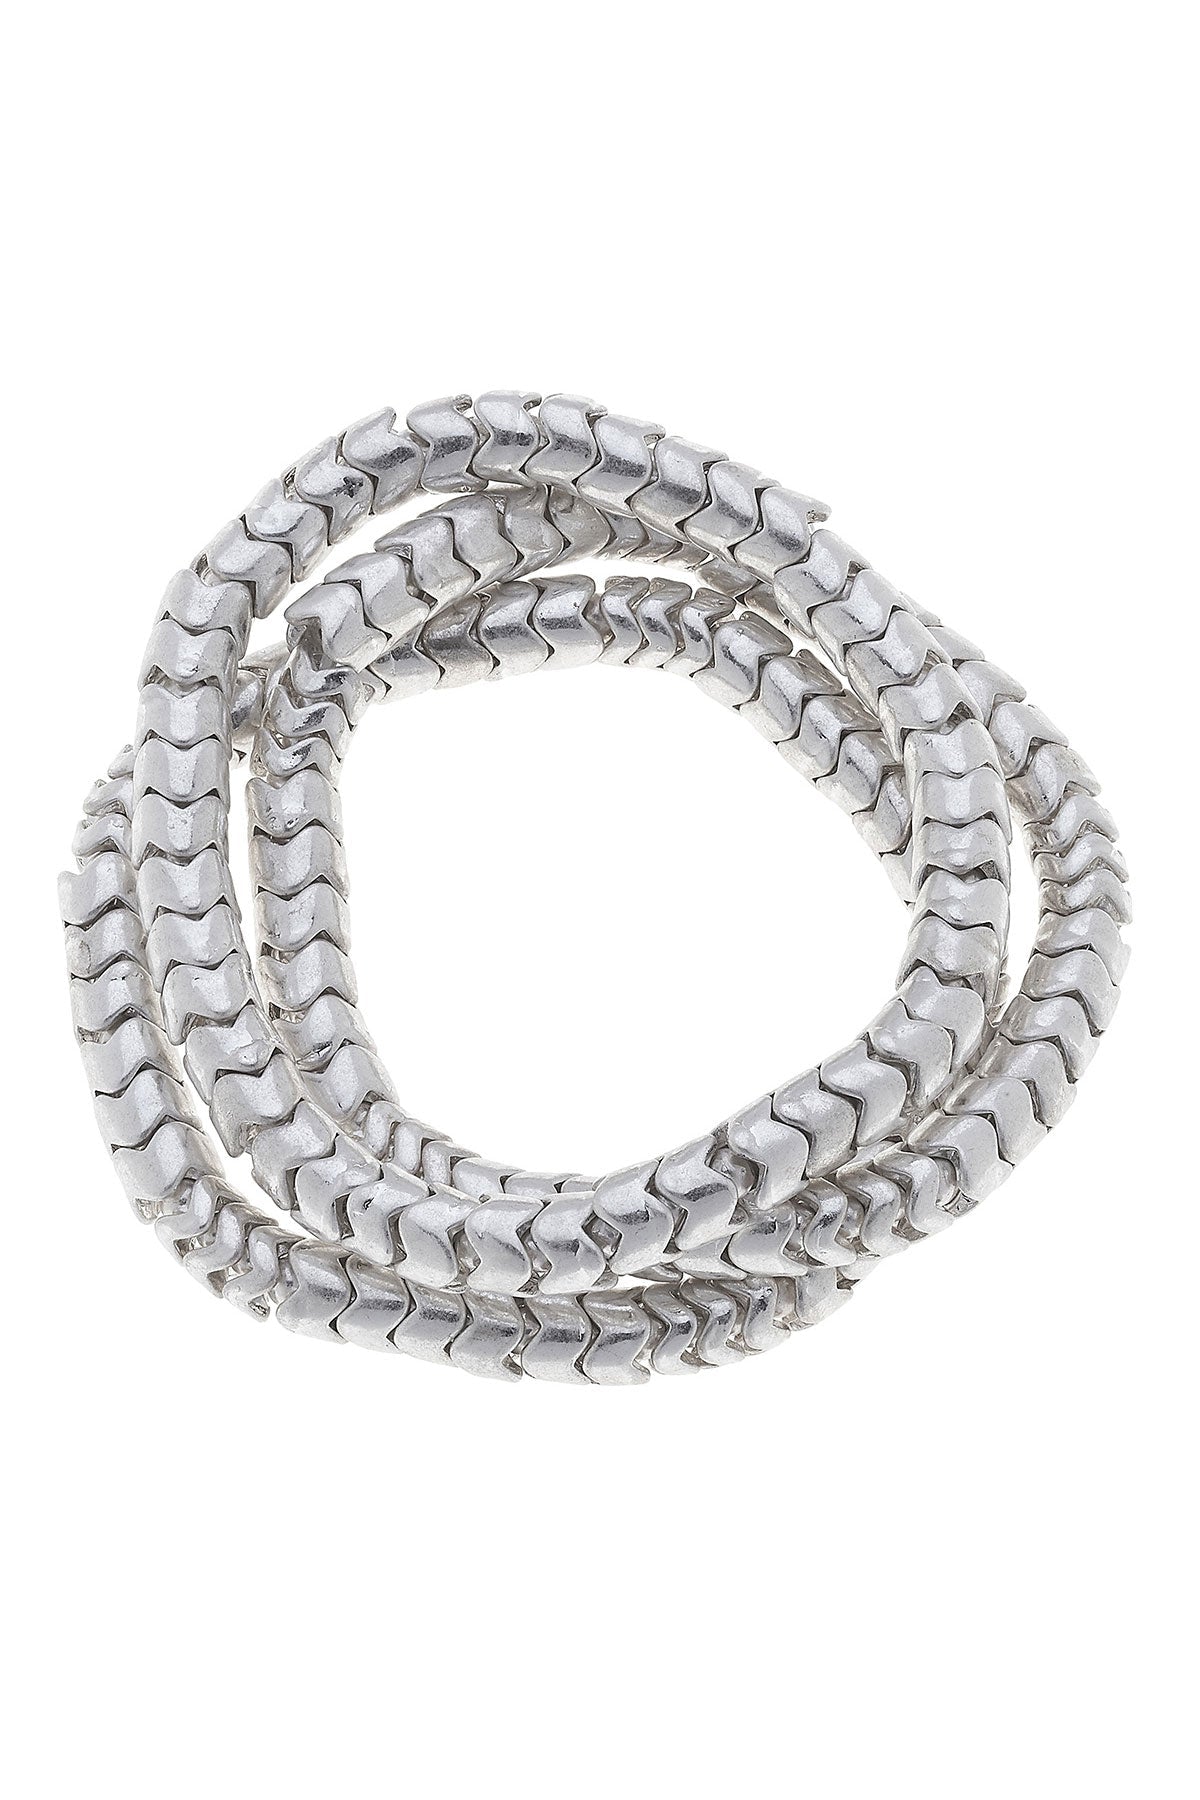 Kylie Chain Stretch Bracelets in Worn Silver (Set of 3)